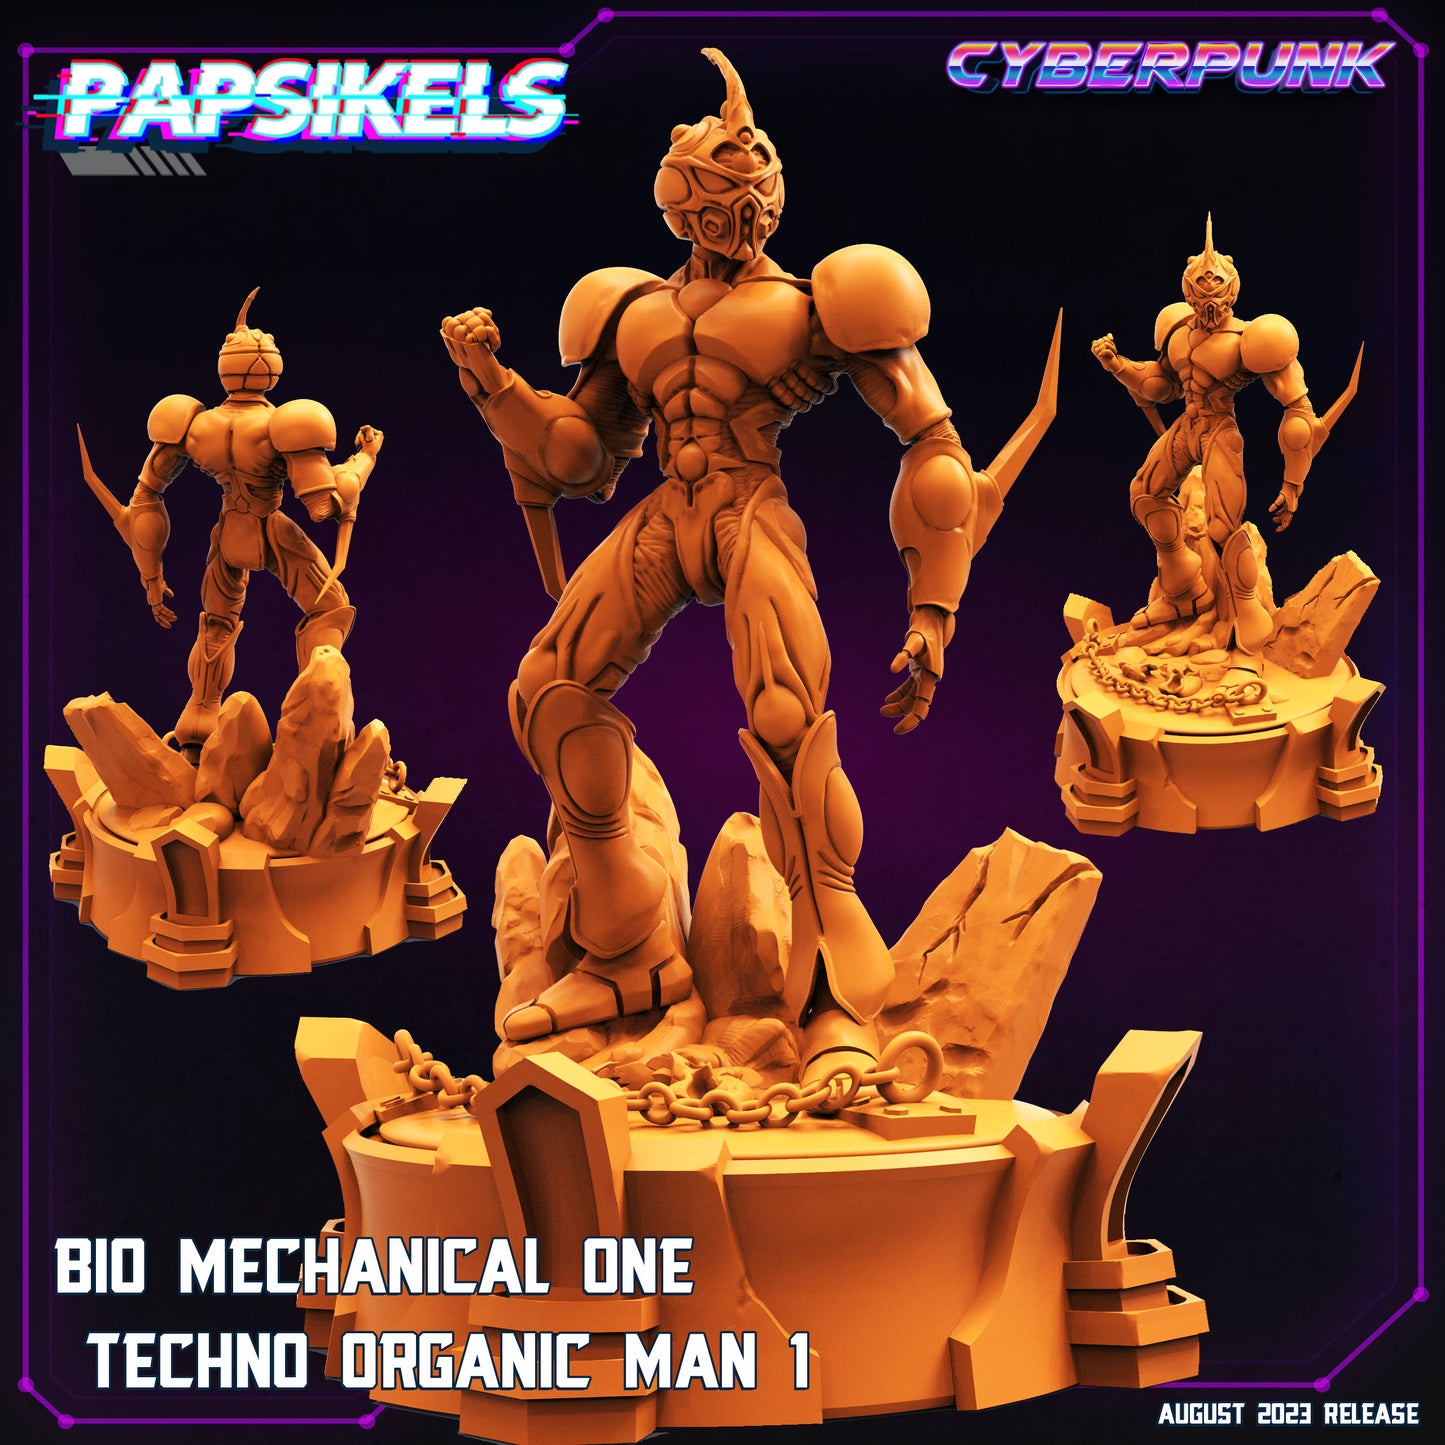 Bio Mechanical One Techno Organic Man 1